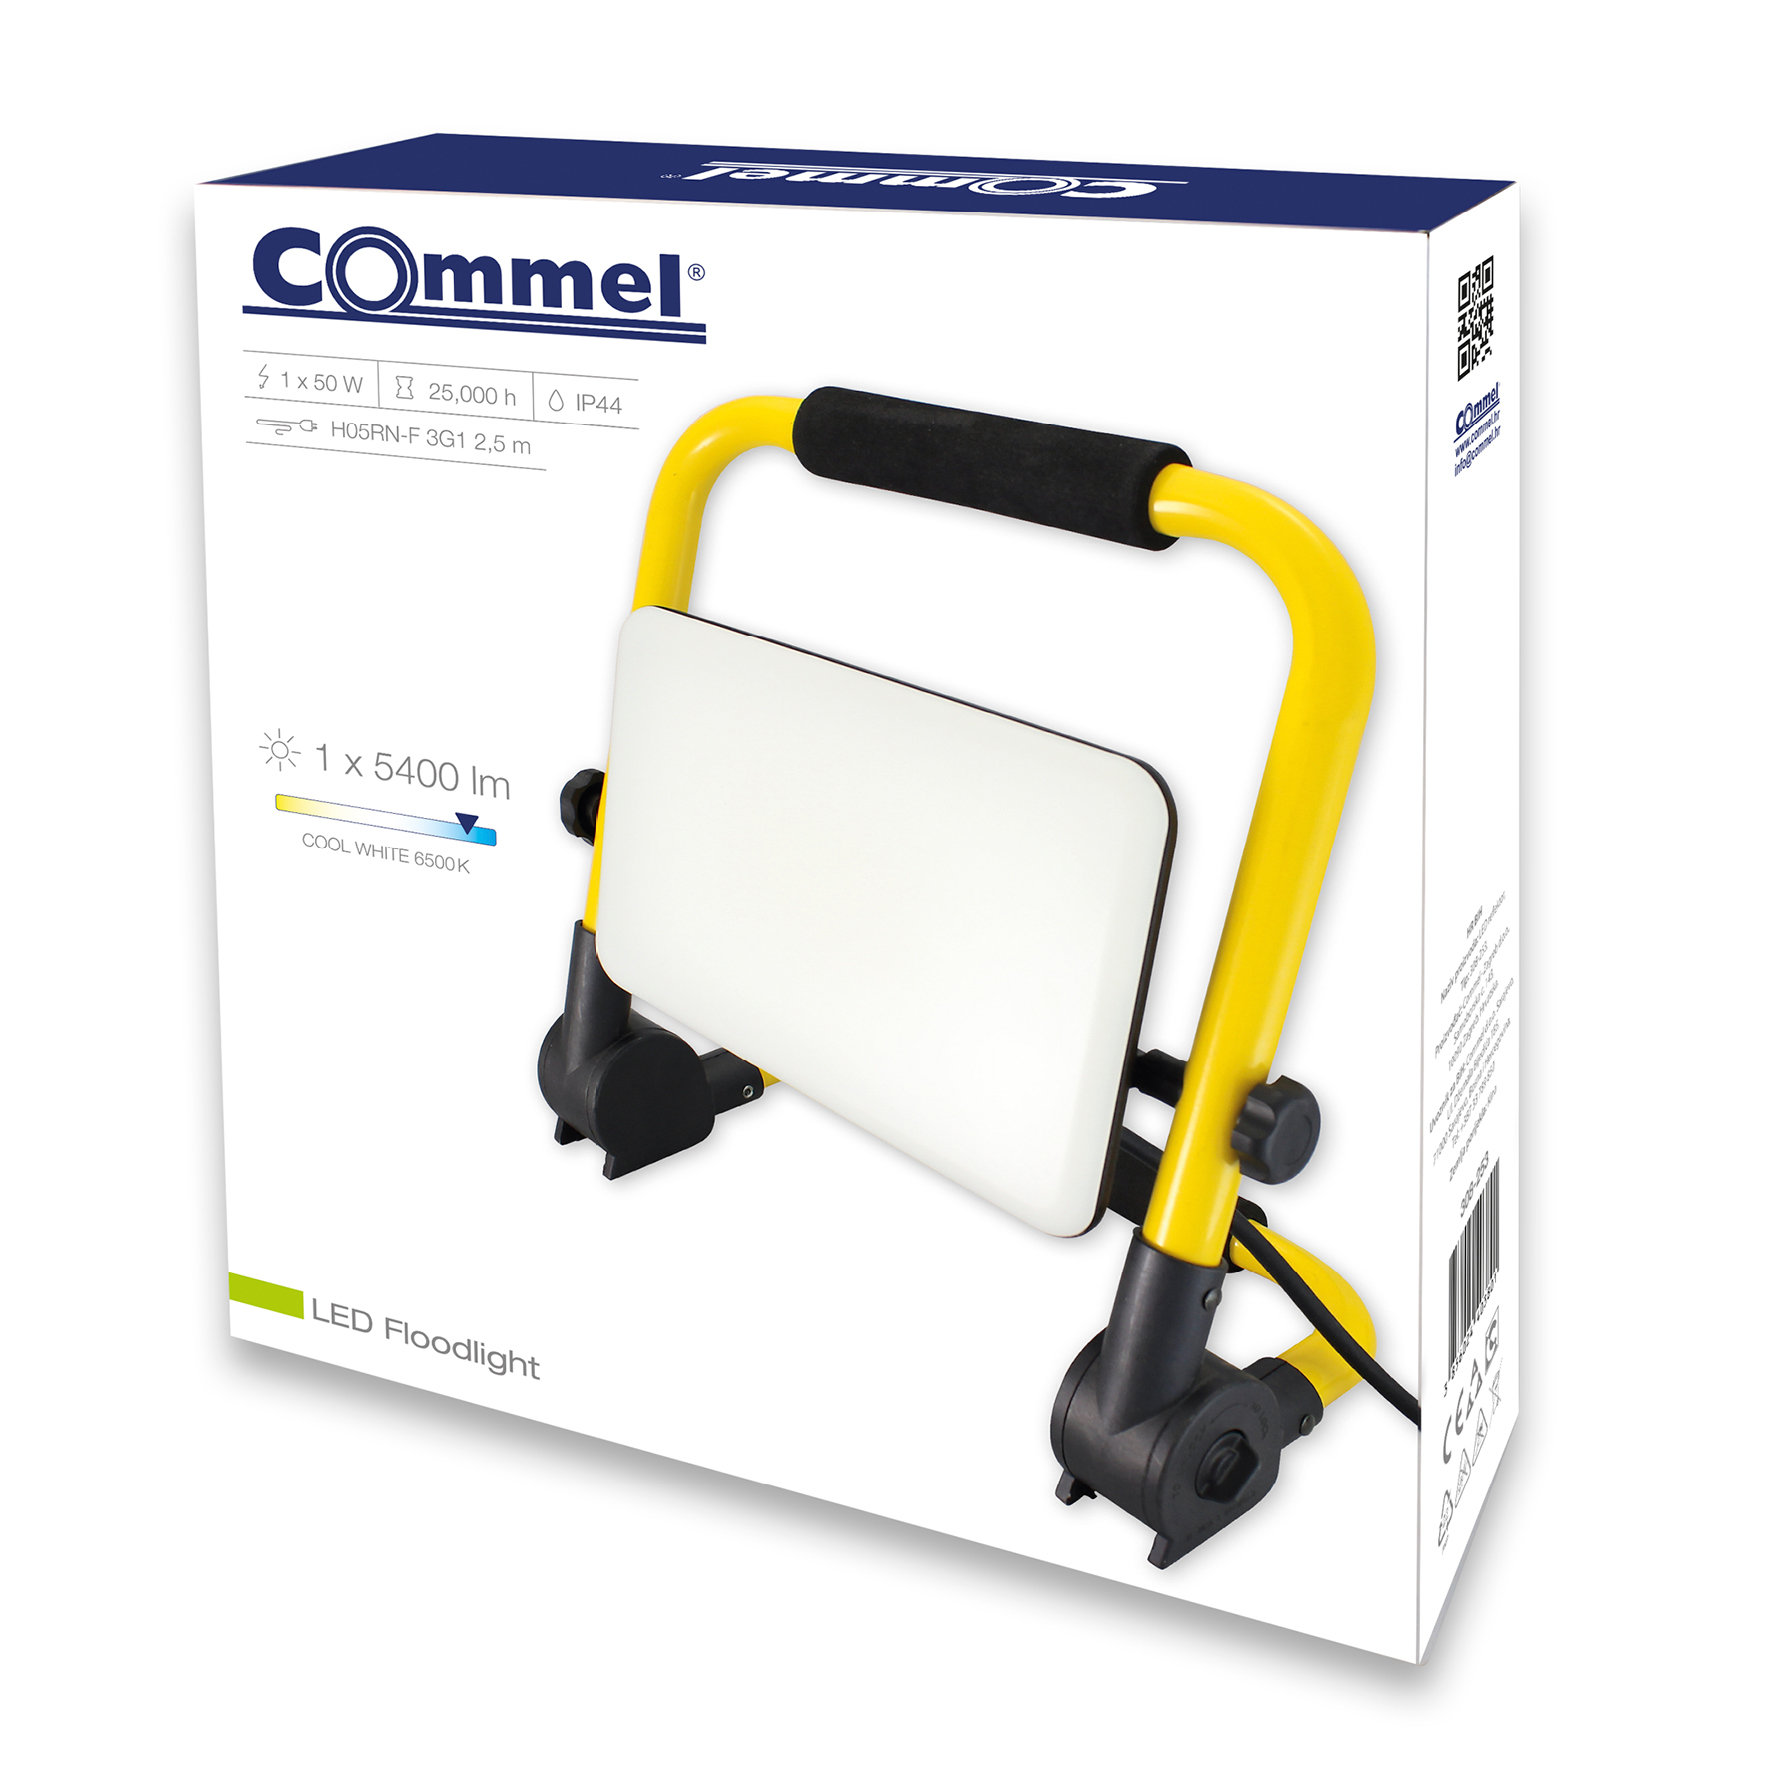 Slika COMMEL LED reflektor na stalku, 308-253, 50W, 6500K, 1x5400 Im, crni, žuti stativ